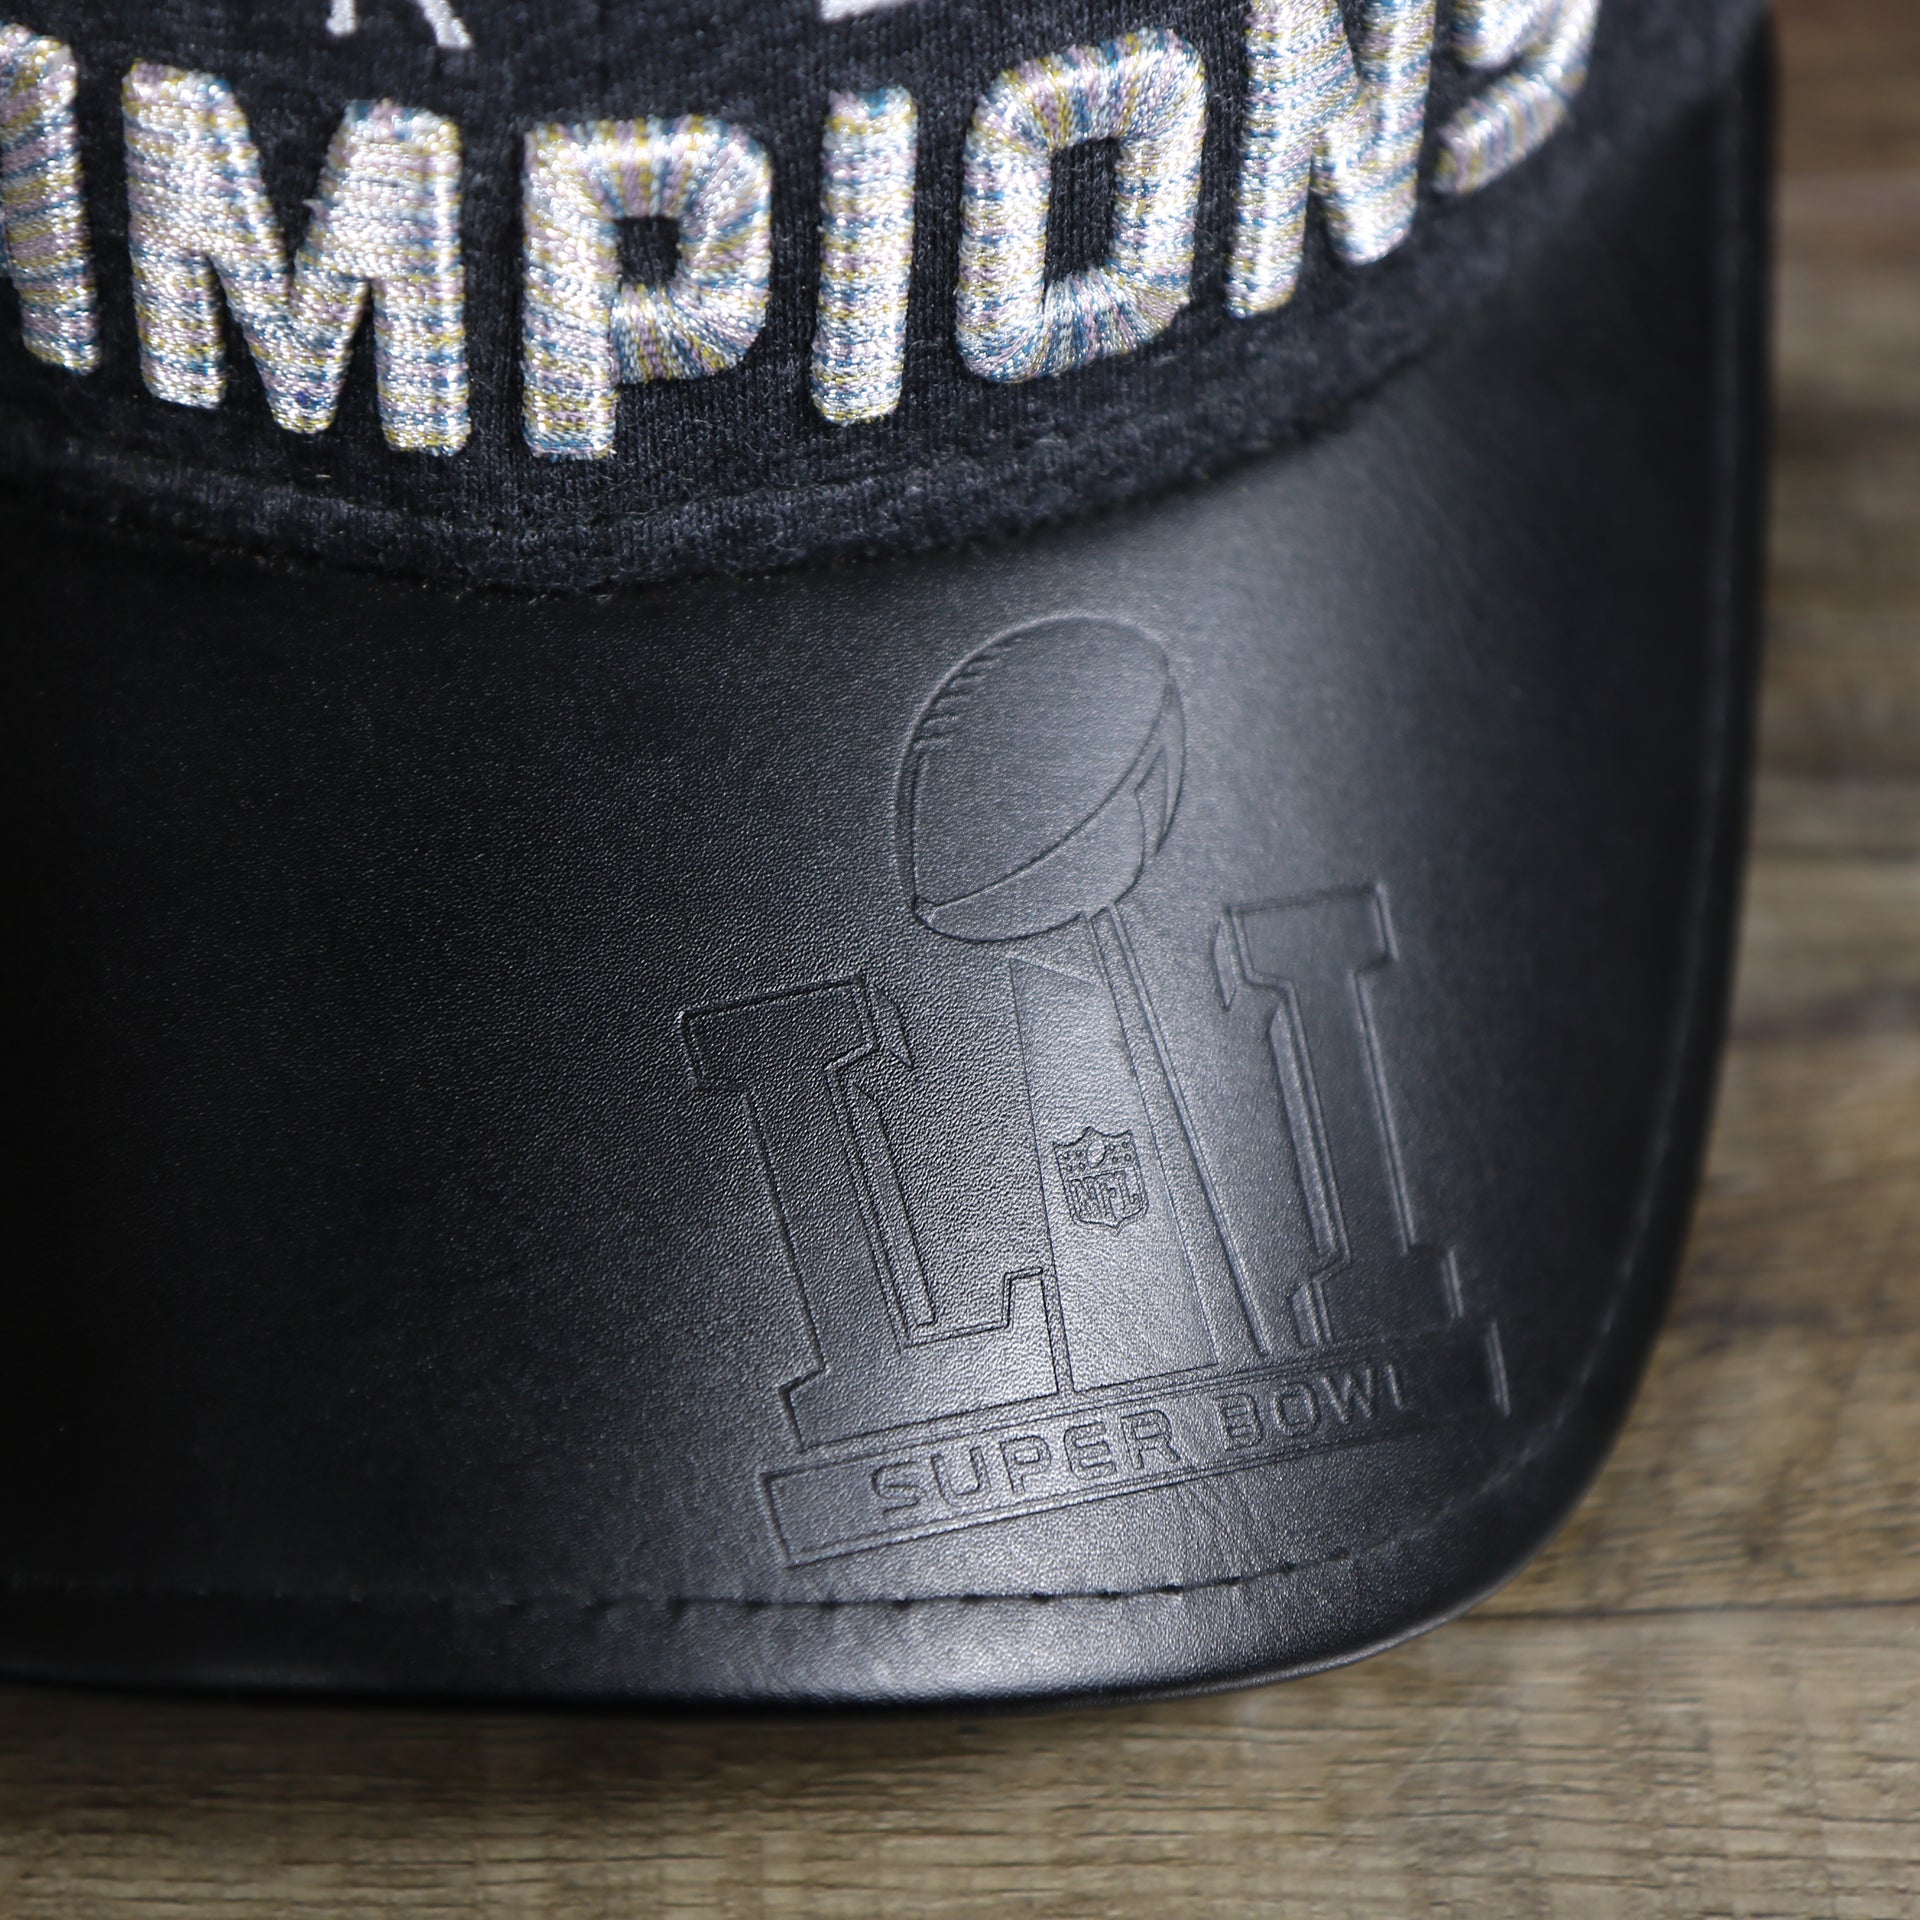 brim of the New England Patriots Locker Room Super Bowl LI Championship Trophy 9Forty Dad Hat